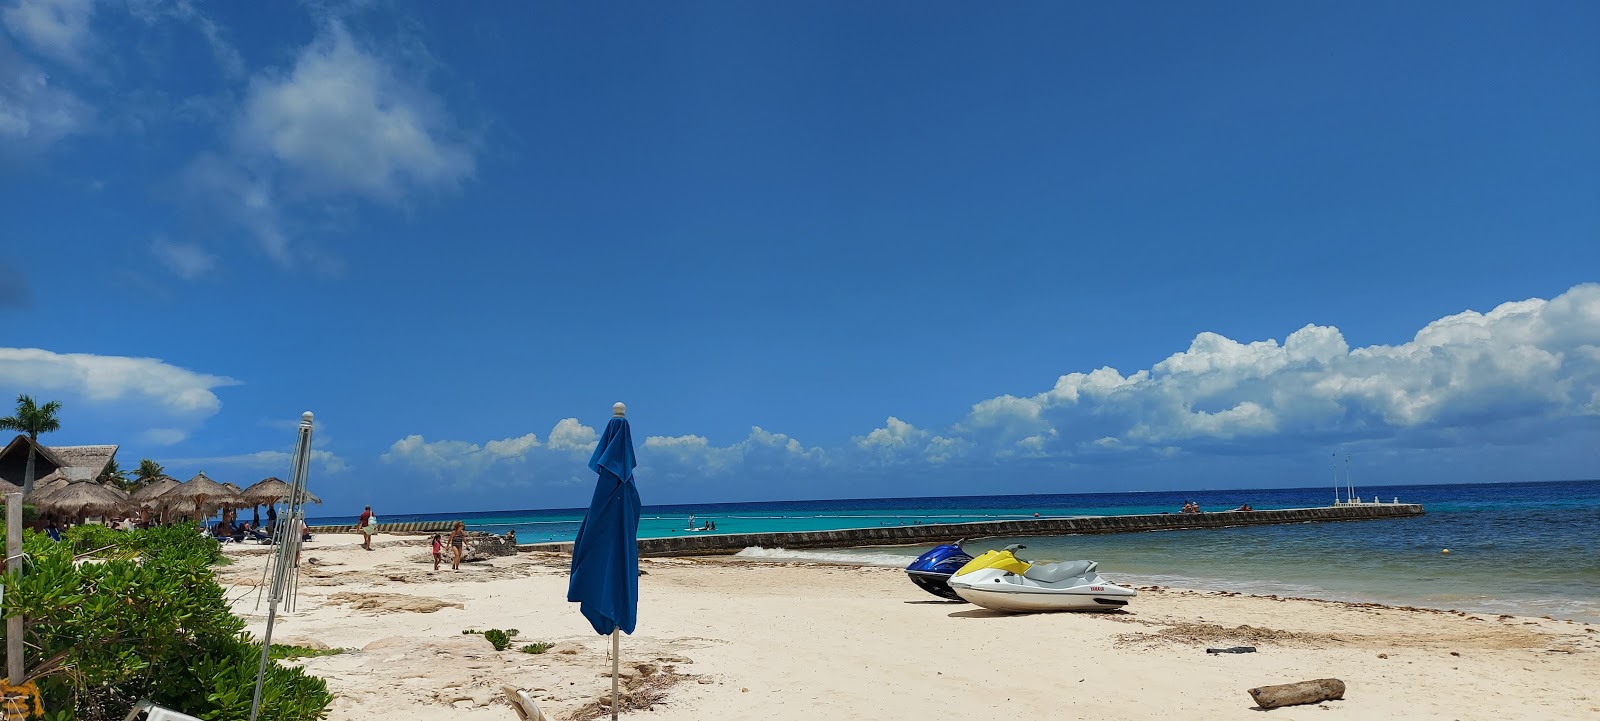 Fotografie cu Playa Punta Norte cu nivelul de curățenie in medie